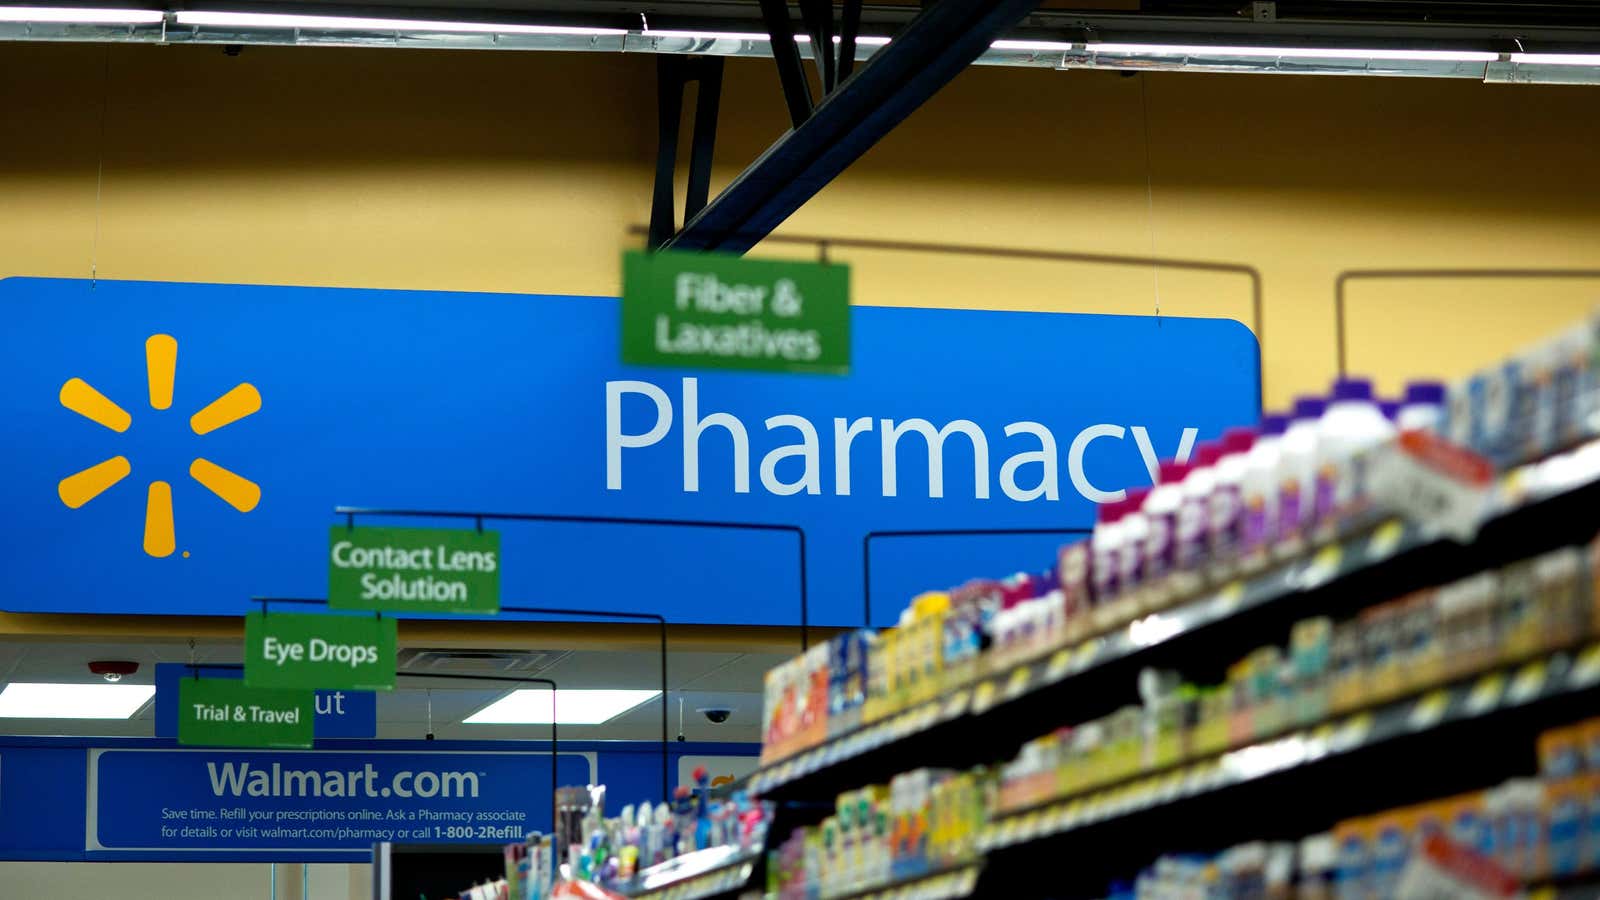 Walmart reportedly wants to buy health insurance giant Humana as